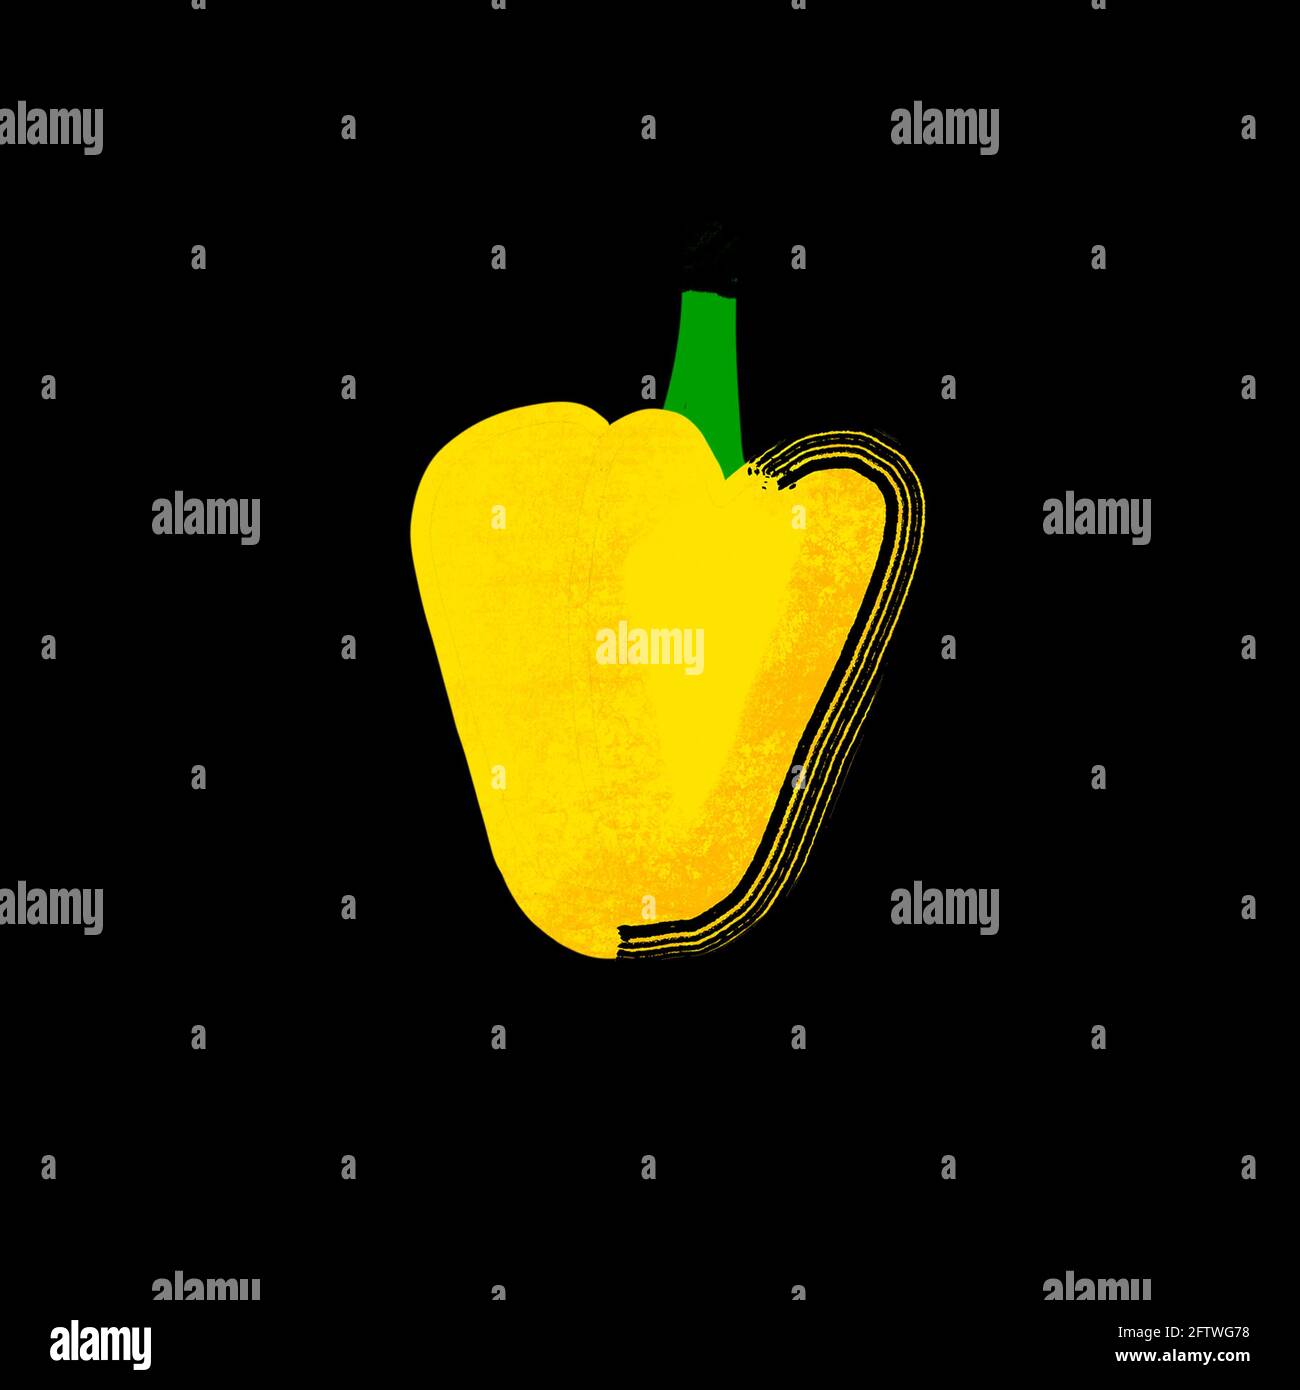 Stylized yellow bell pepper illustration on black Stock Photo